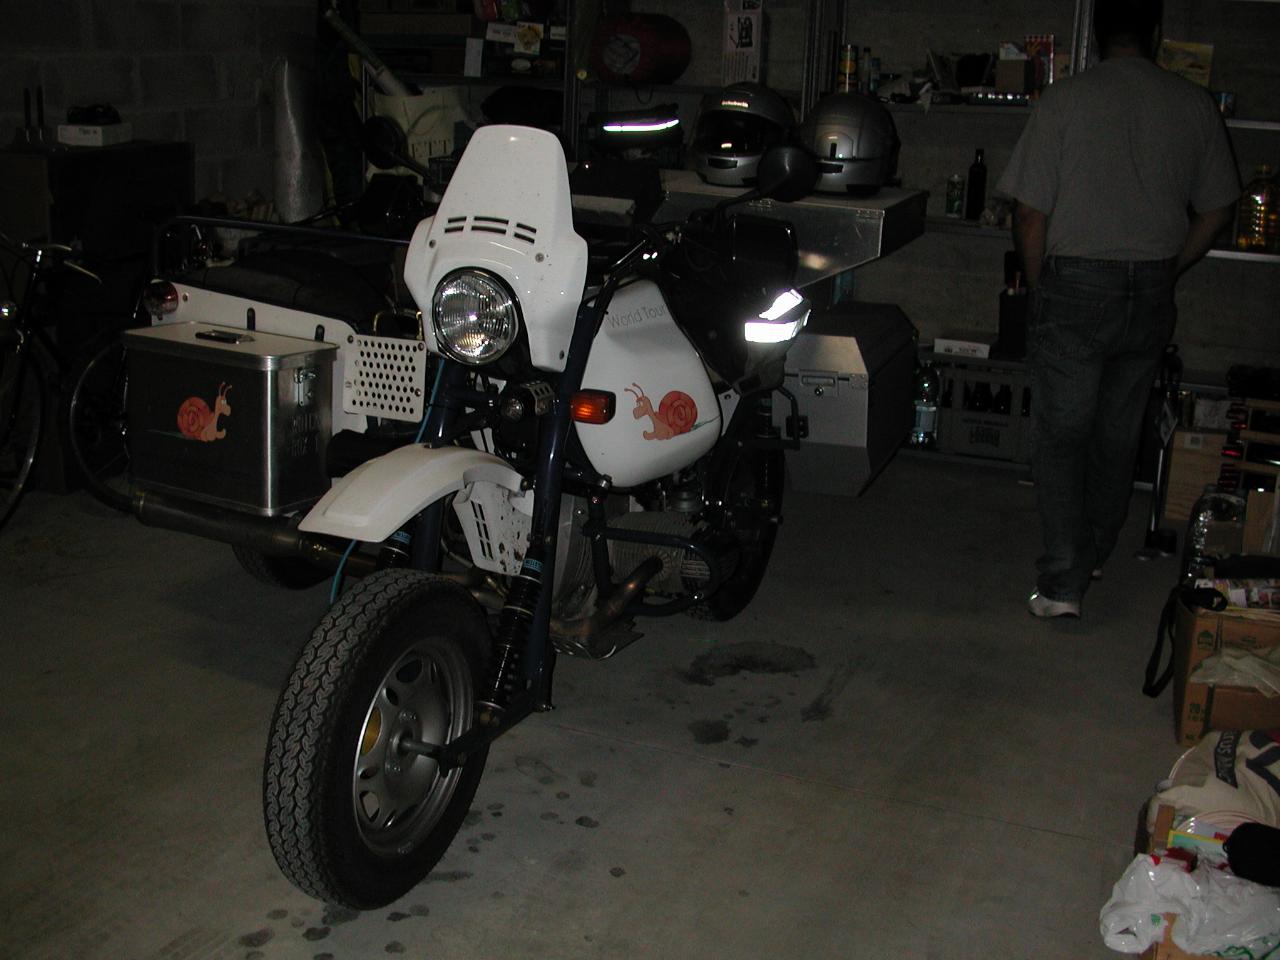 Norris/Seavey world tour bike in Bruno's garage